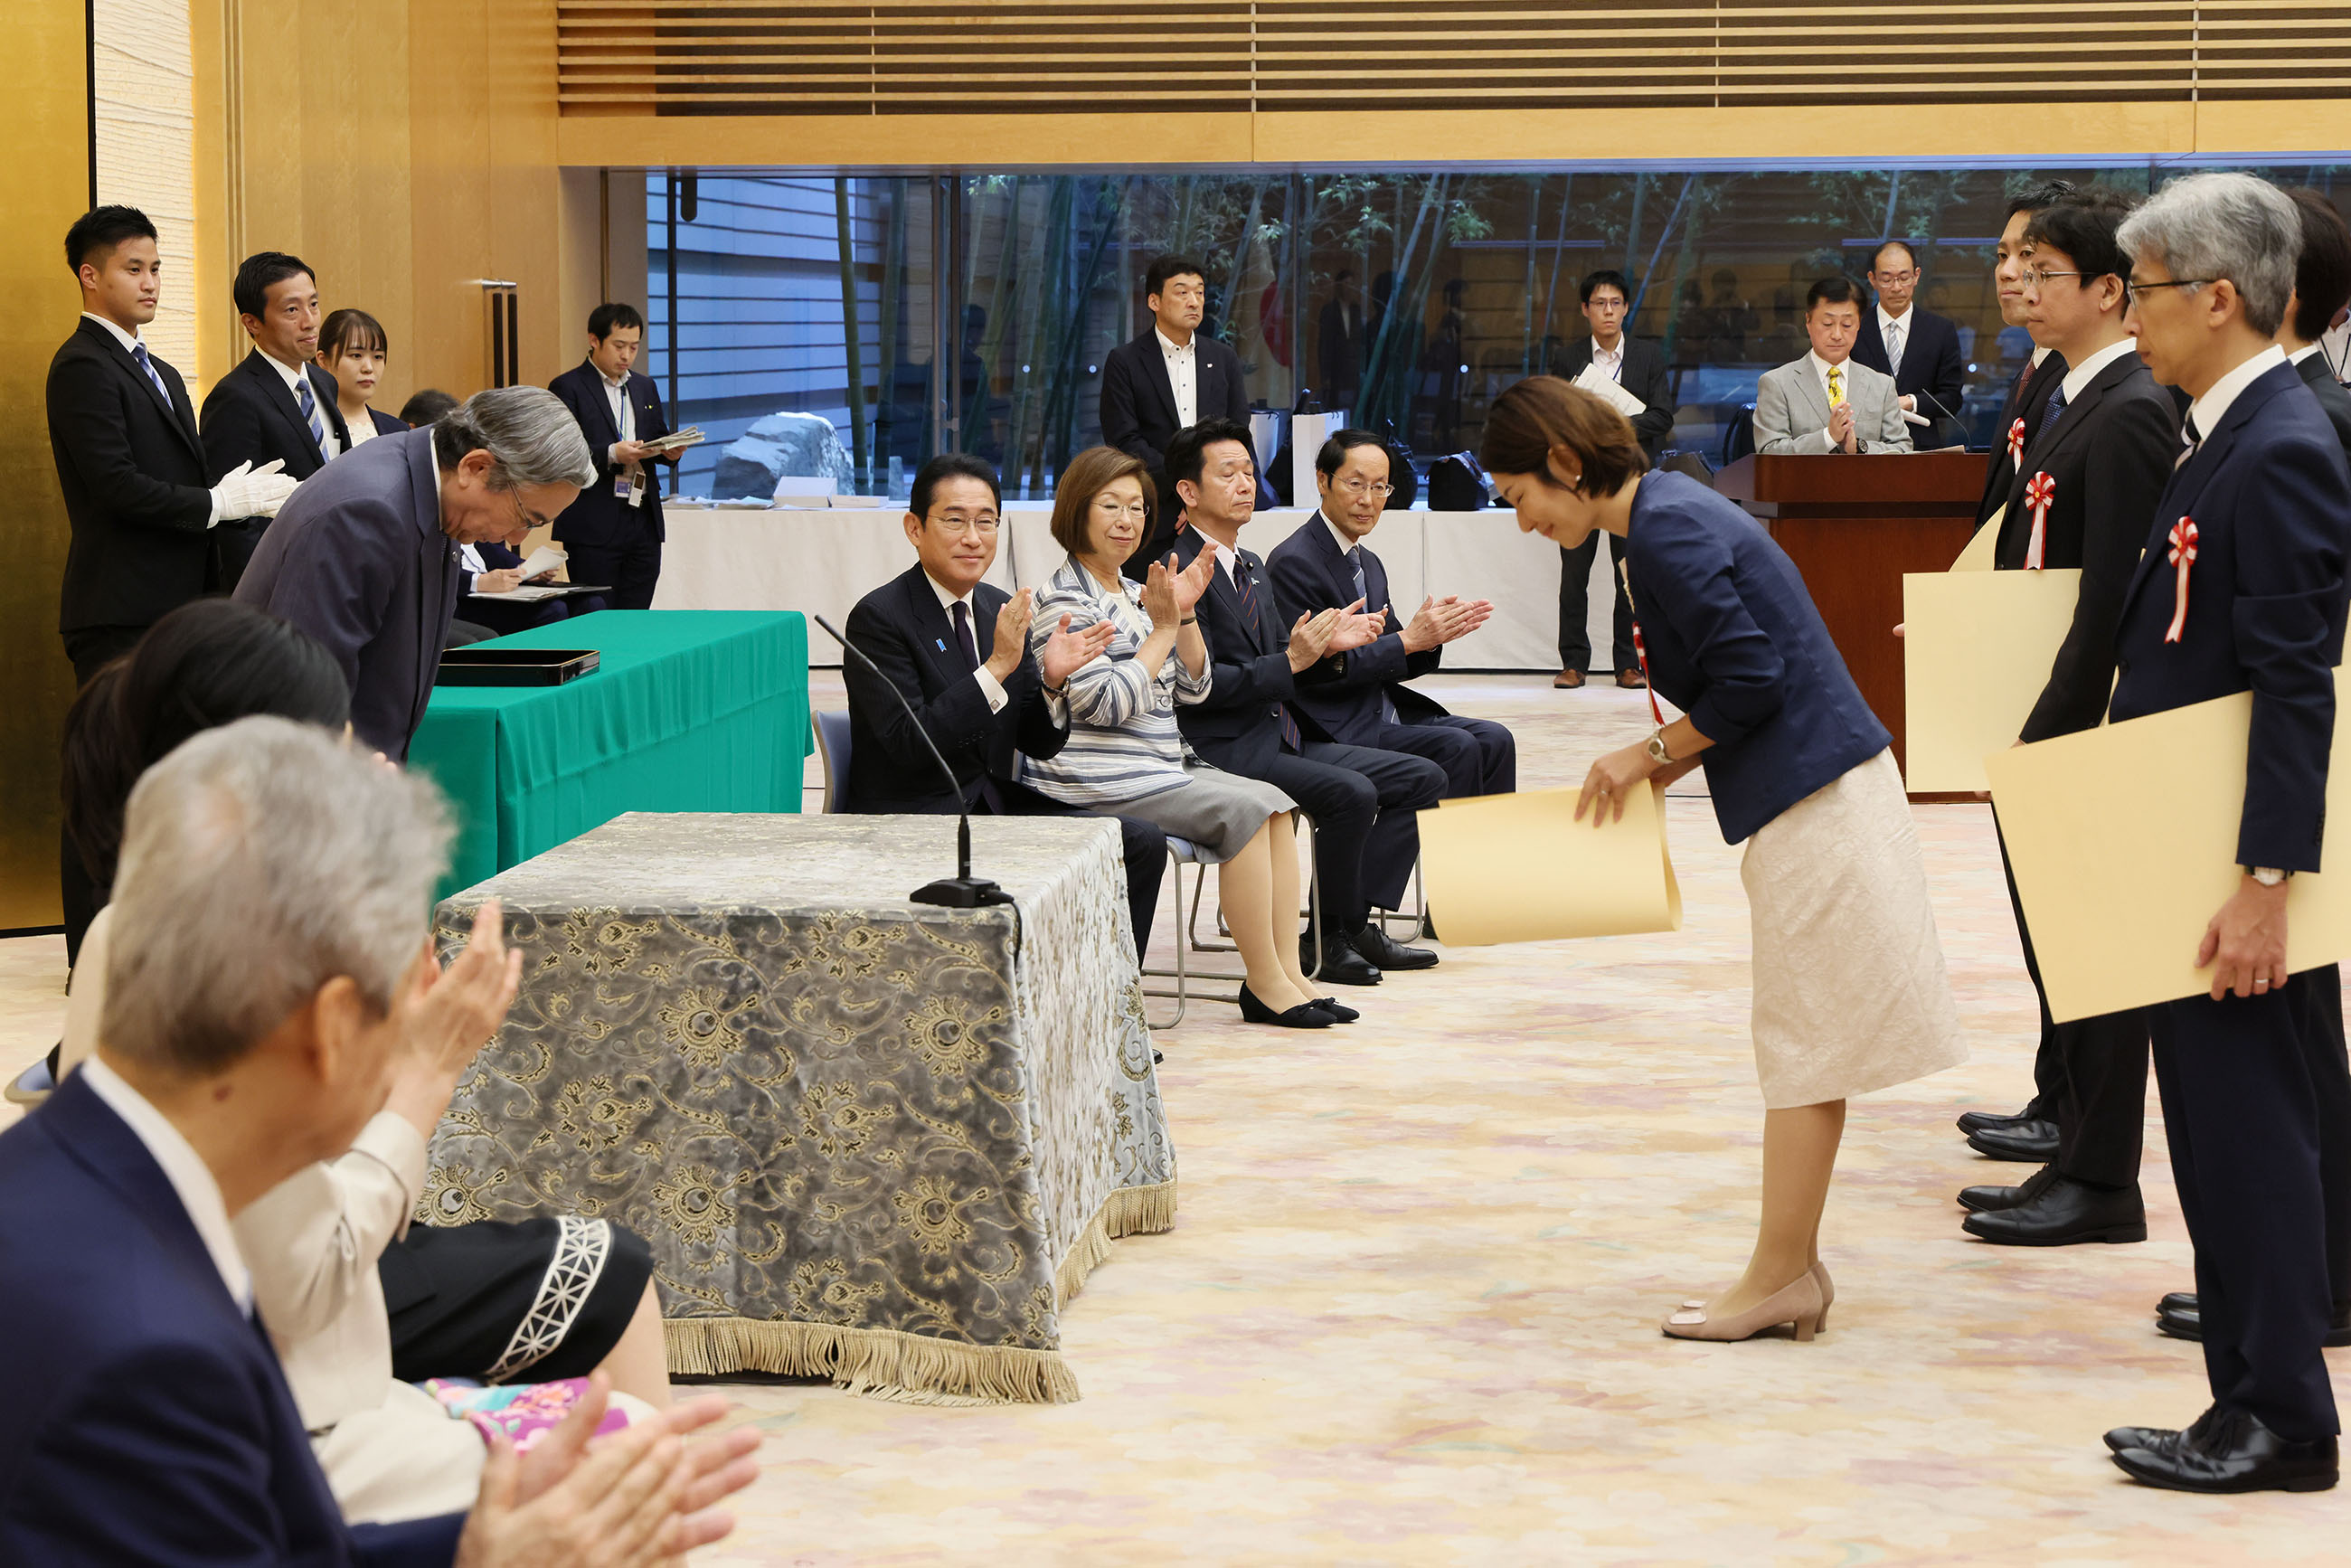 Prime Minister Kishida attending the award ceremony